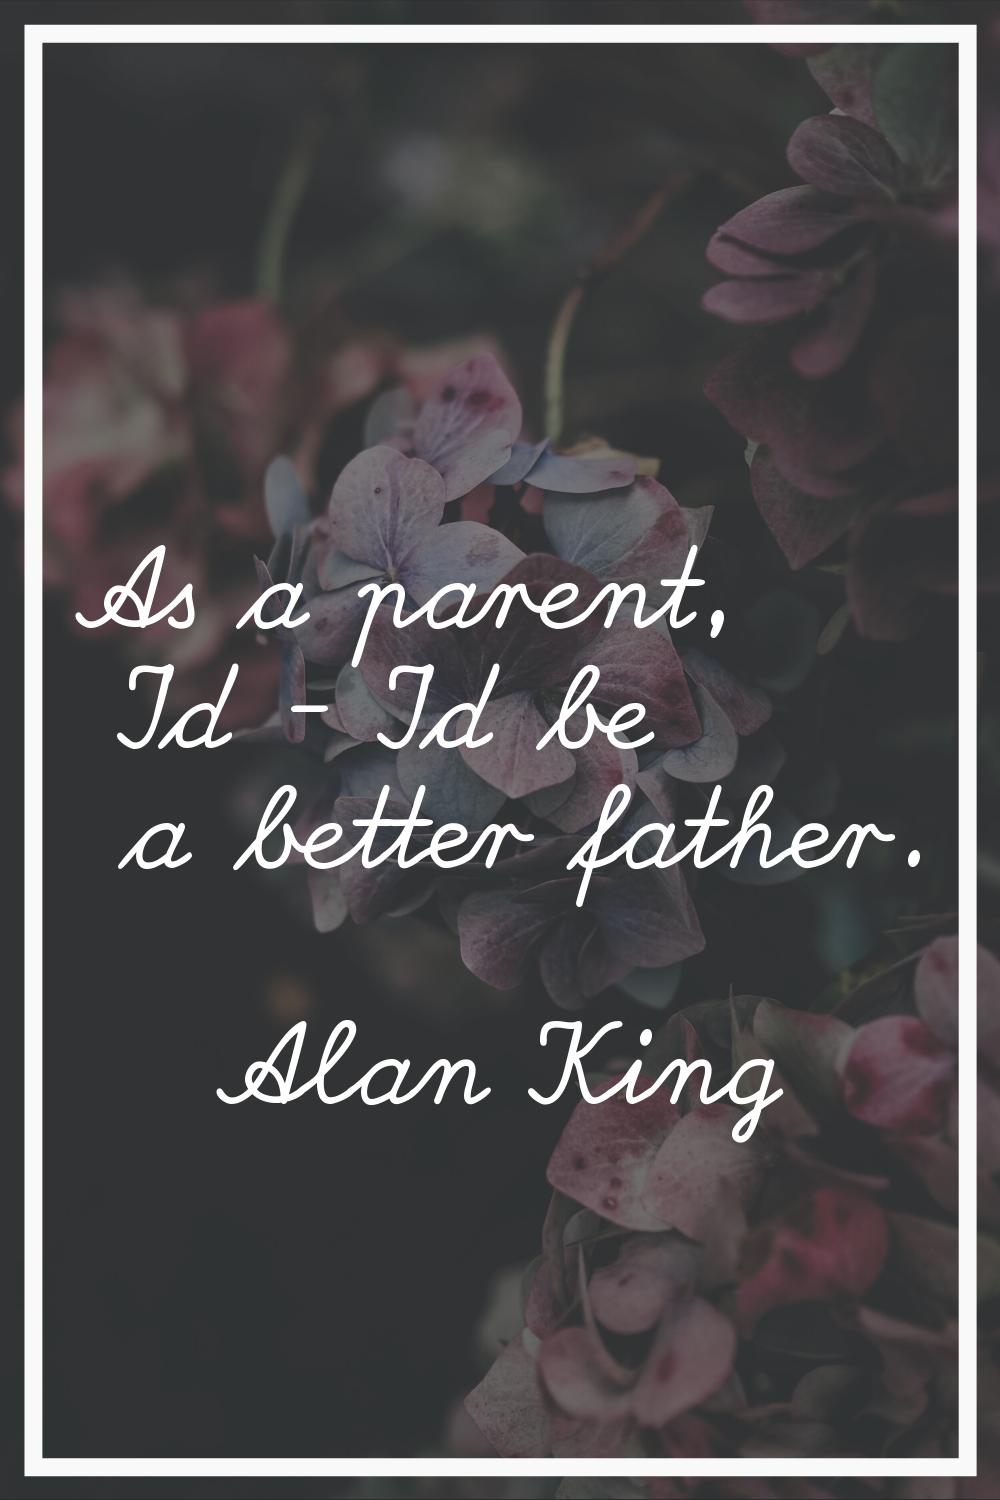 As a parent, I'd - I'd be a better father.